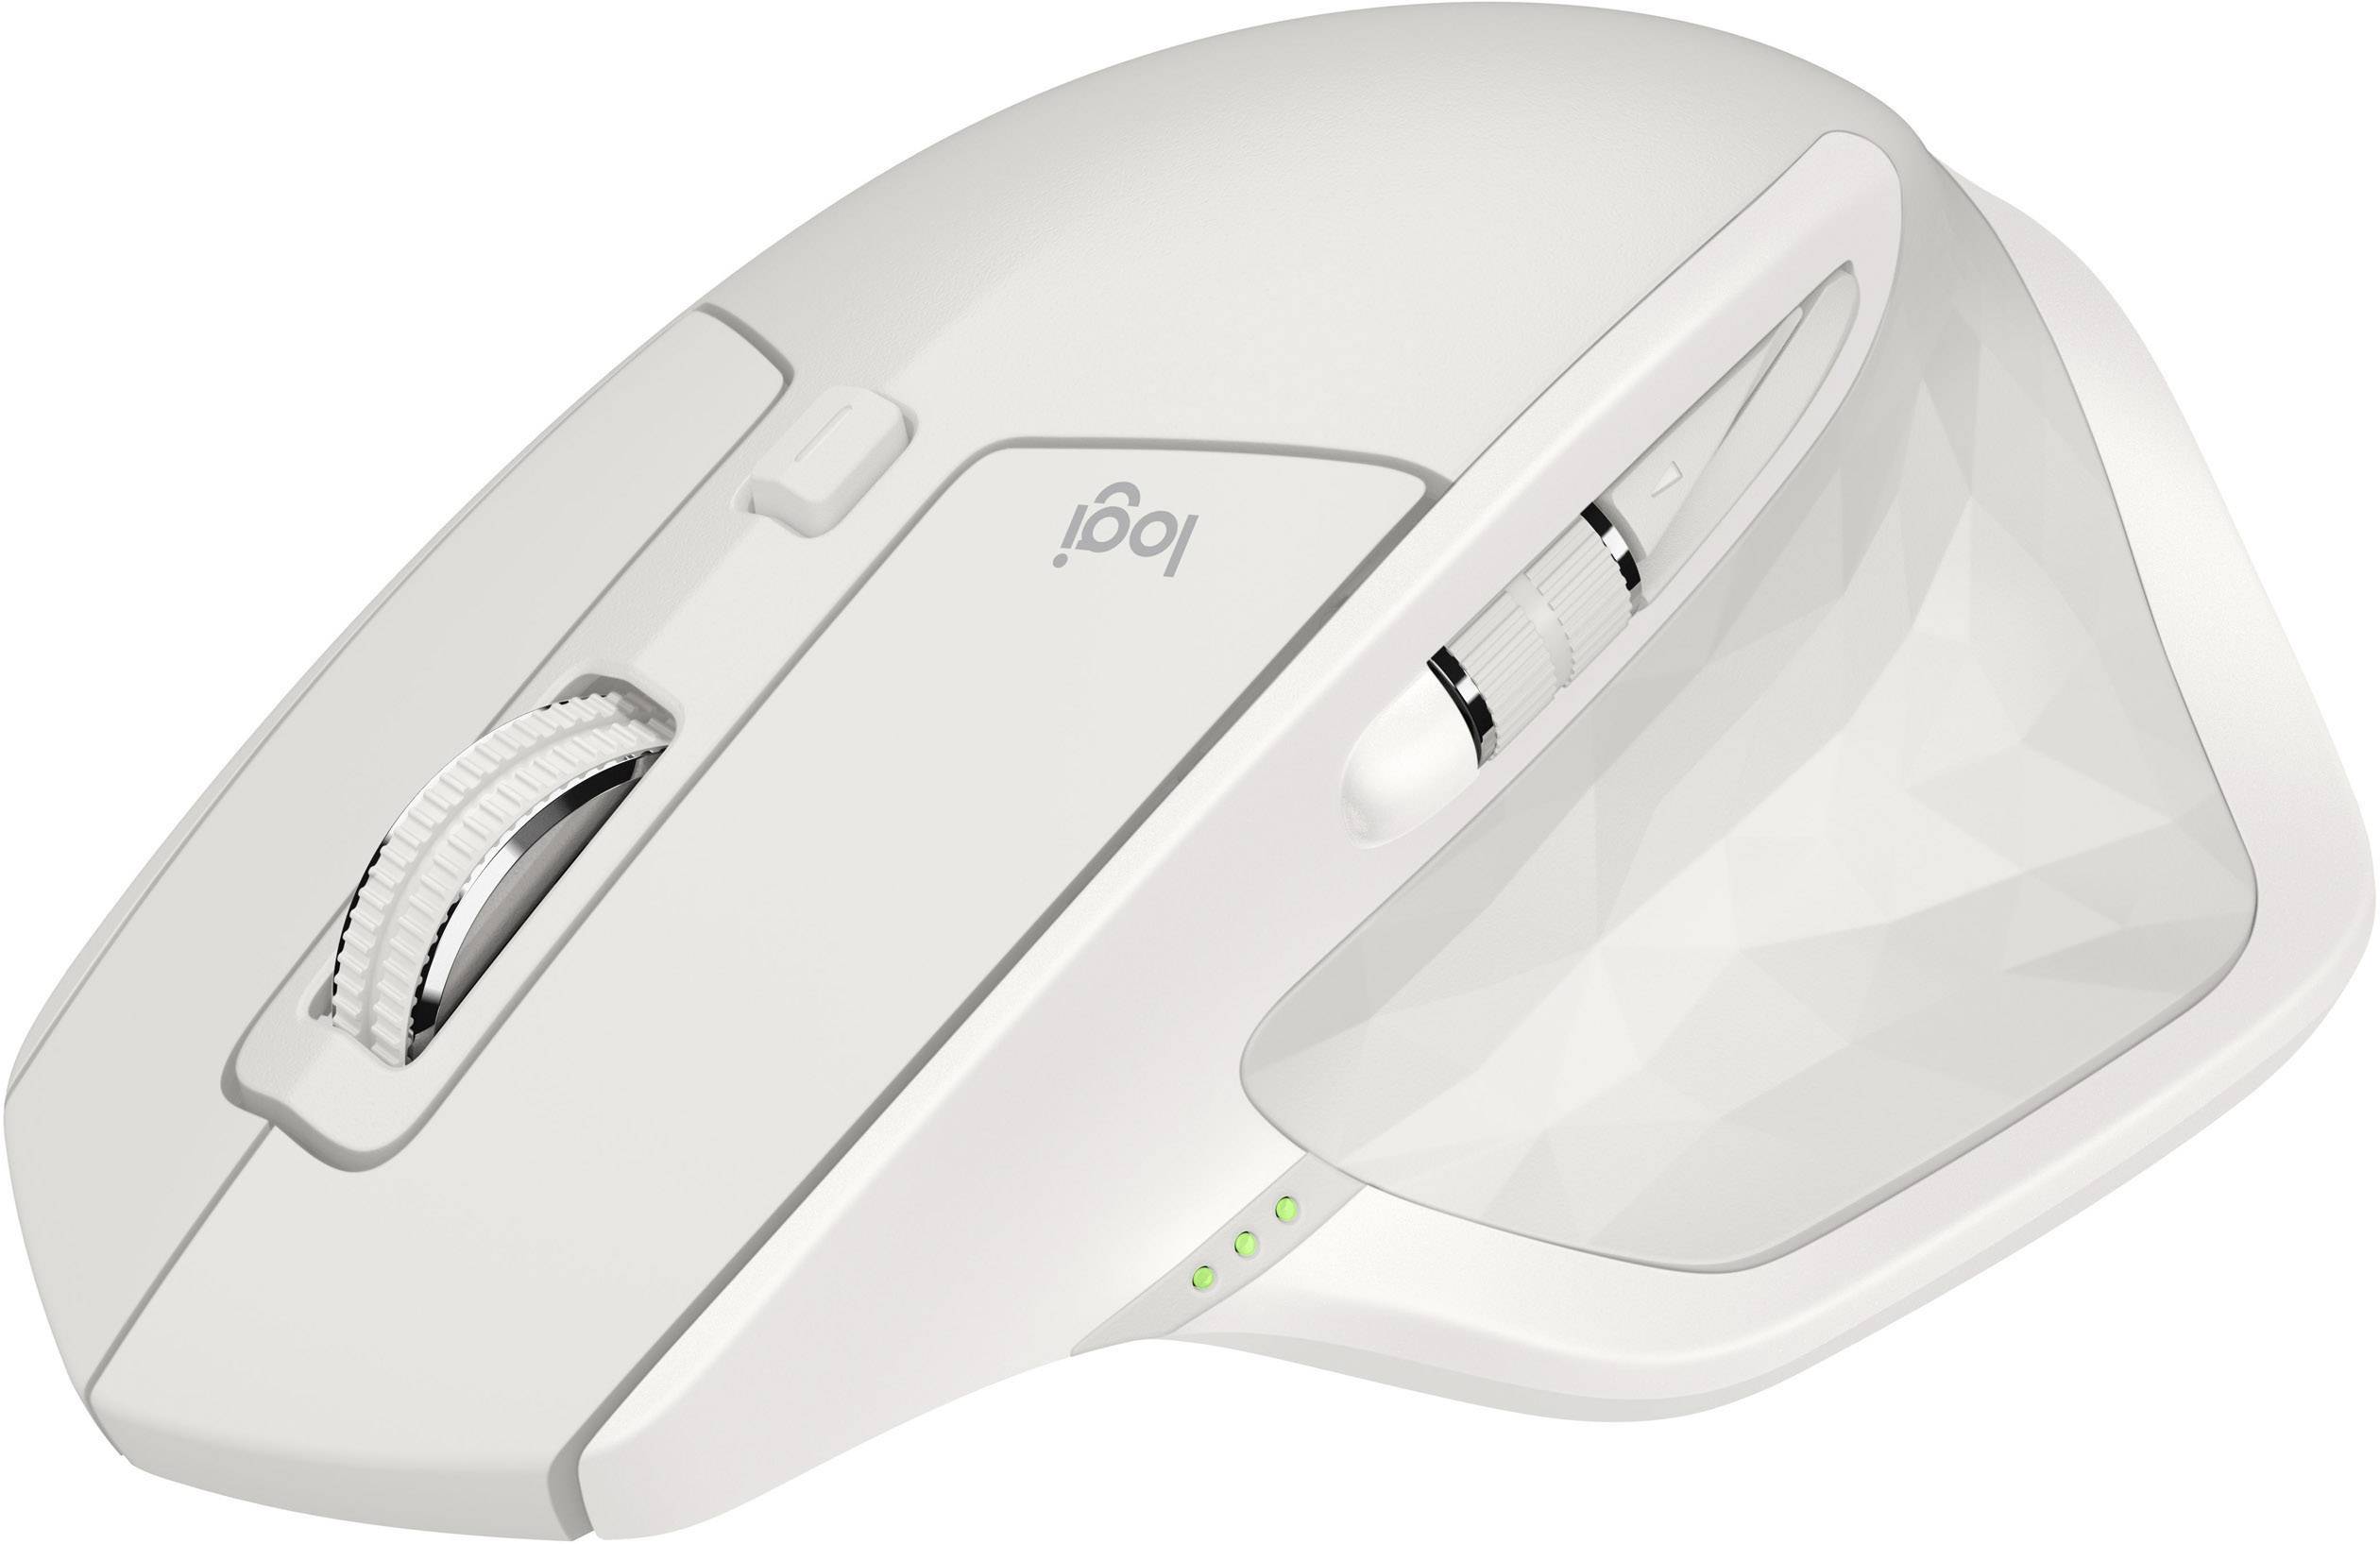 Master 2S Mouse Bluetooth® Laser Light grey 6 Buttons 4000 dpi Rechargeable, Ergonomic | Conrad.com